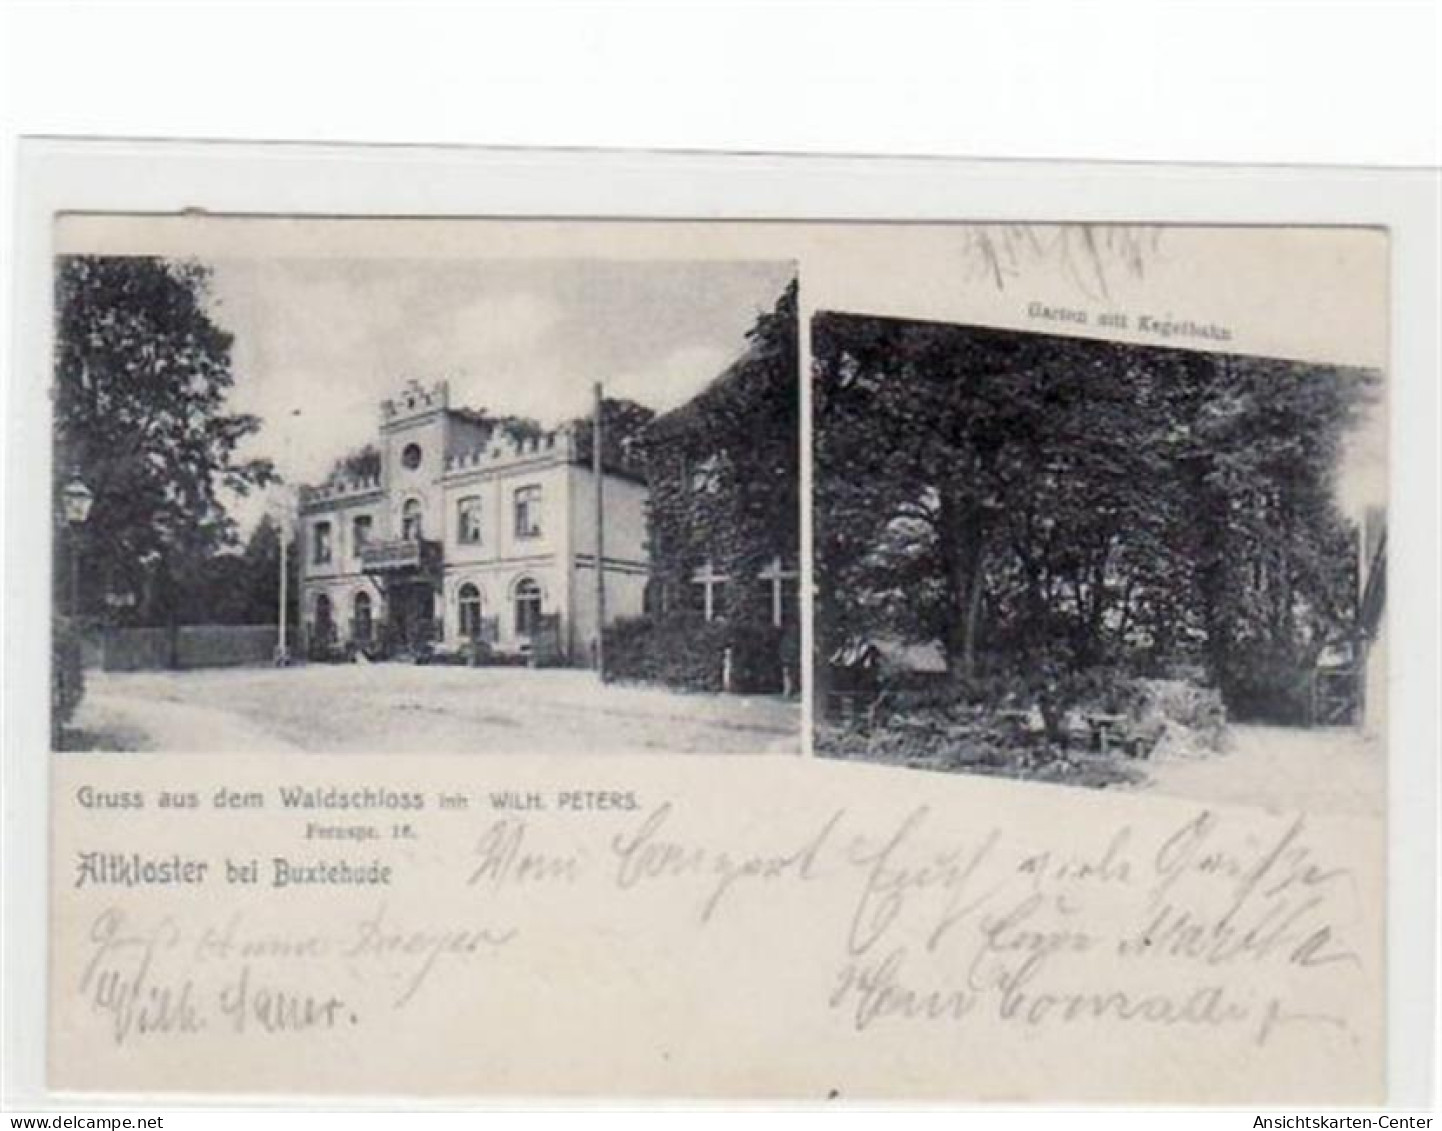 39068501 - Altkloster Bei Buxtehude, 2 Abbildungen Mit Waldschloss Gelaufen, 1906. Gute Erhaltung. - Stade